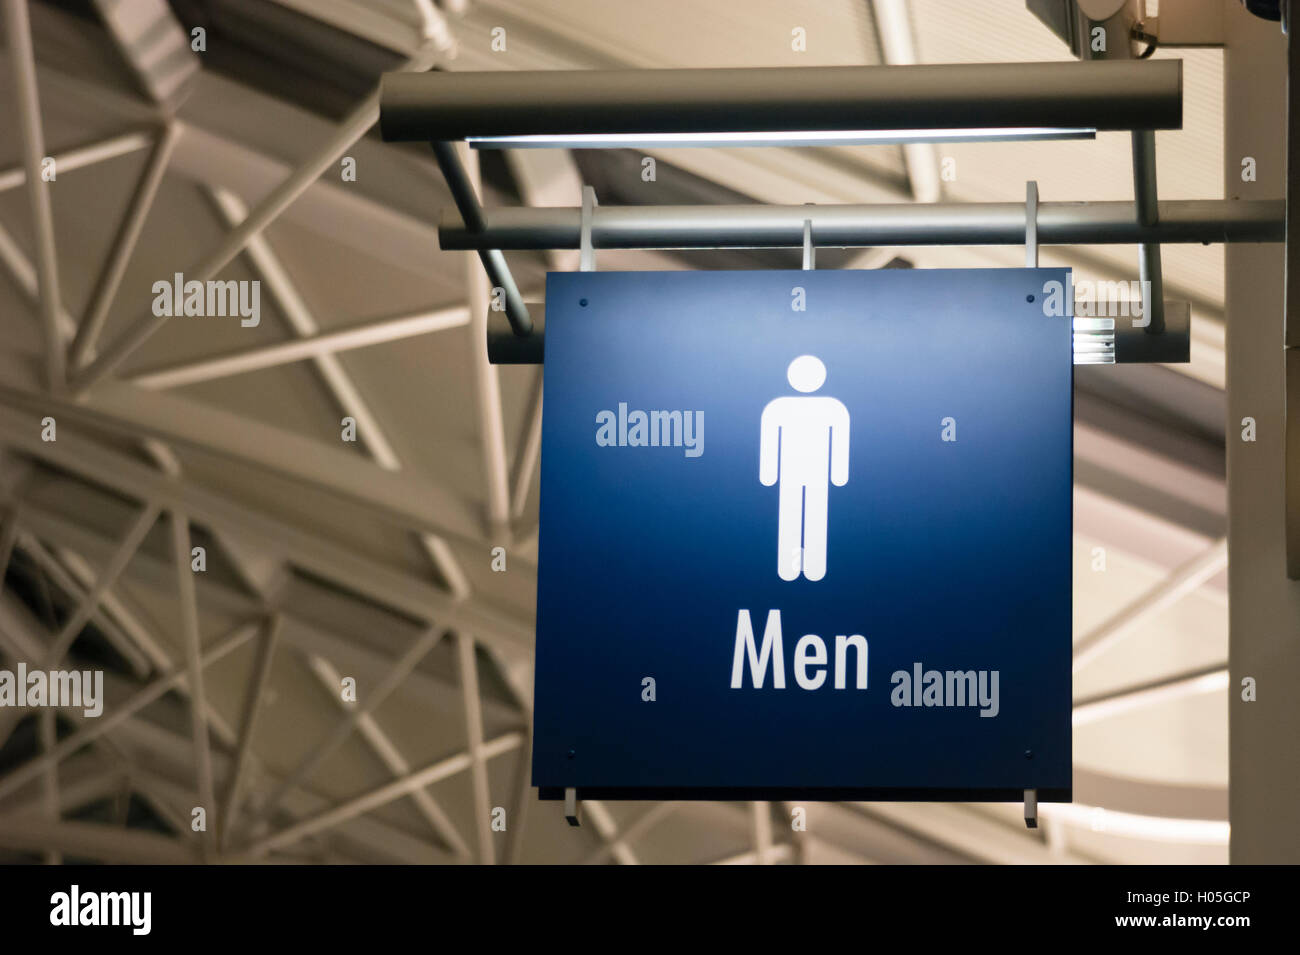 Men's Restroom Male Lavatory Sign Marker Public Building Architecture Stock Photo